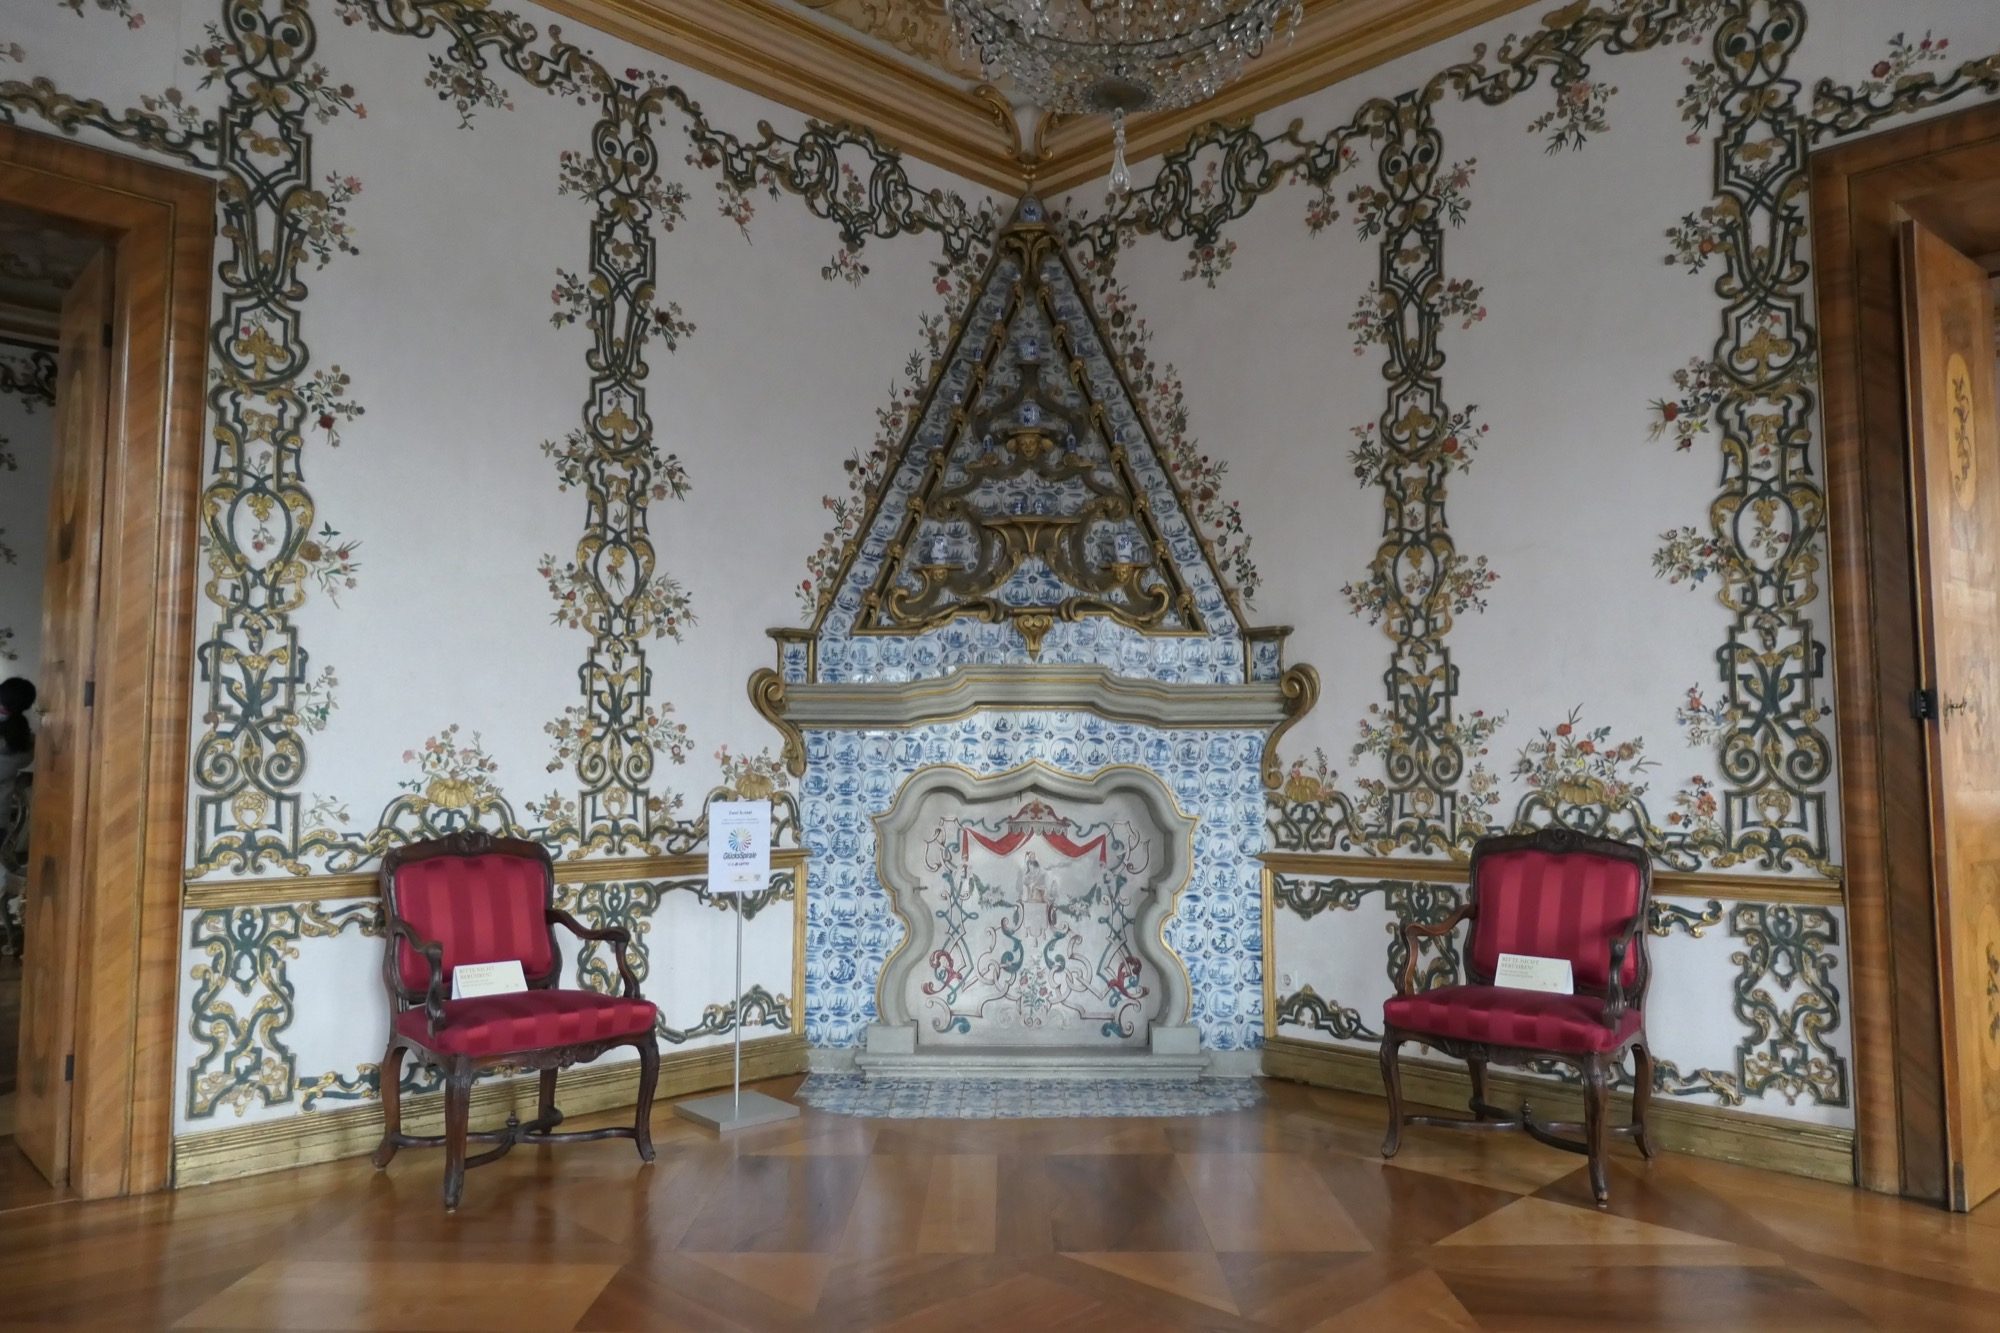 Tile stove at Rastatt Favorite Palace.